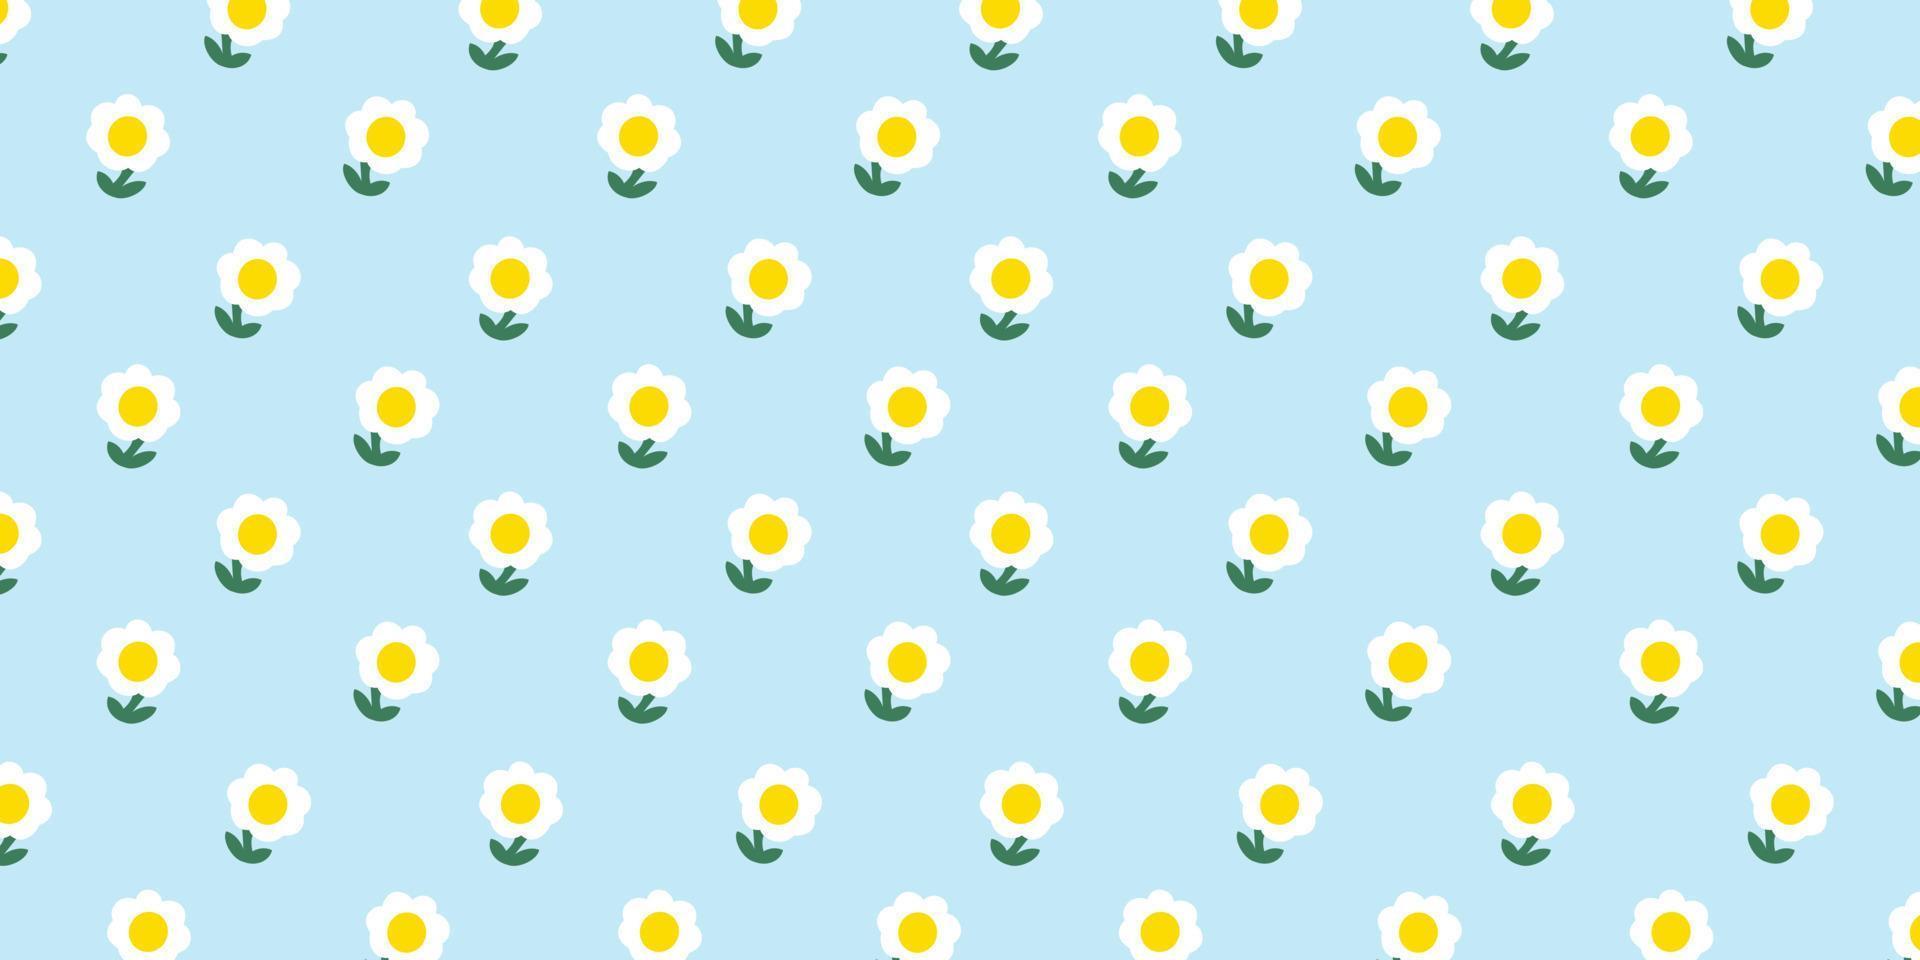 Simple flower pattern for cute background. Trendy kids wallpaper design vector